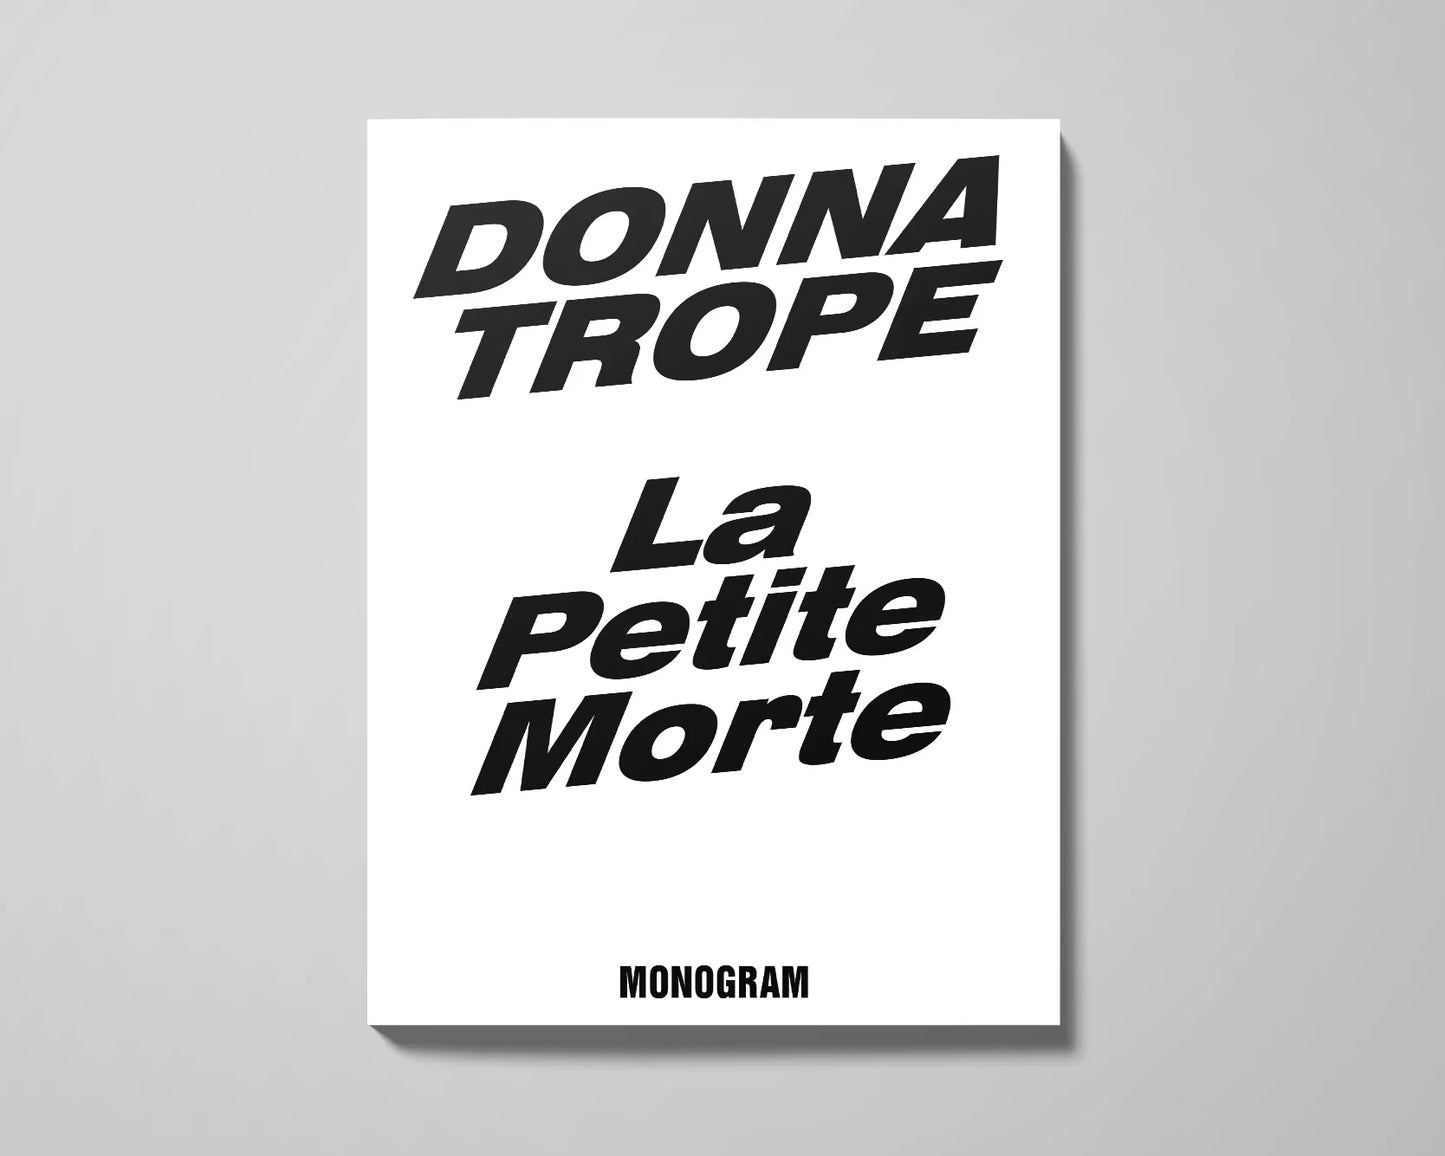 Donna Trope - La Petite Morte